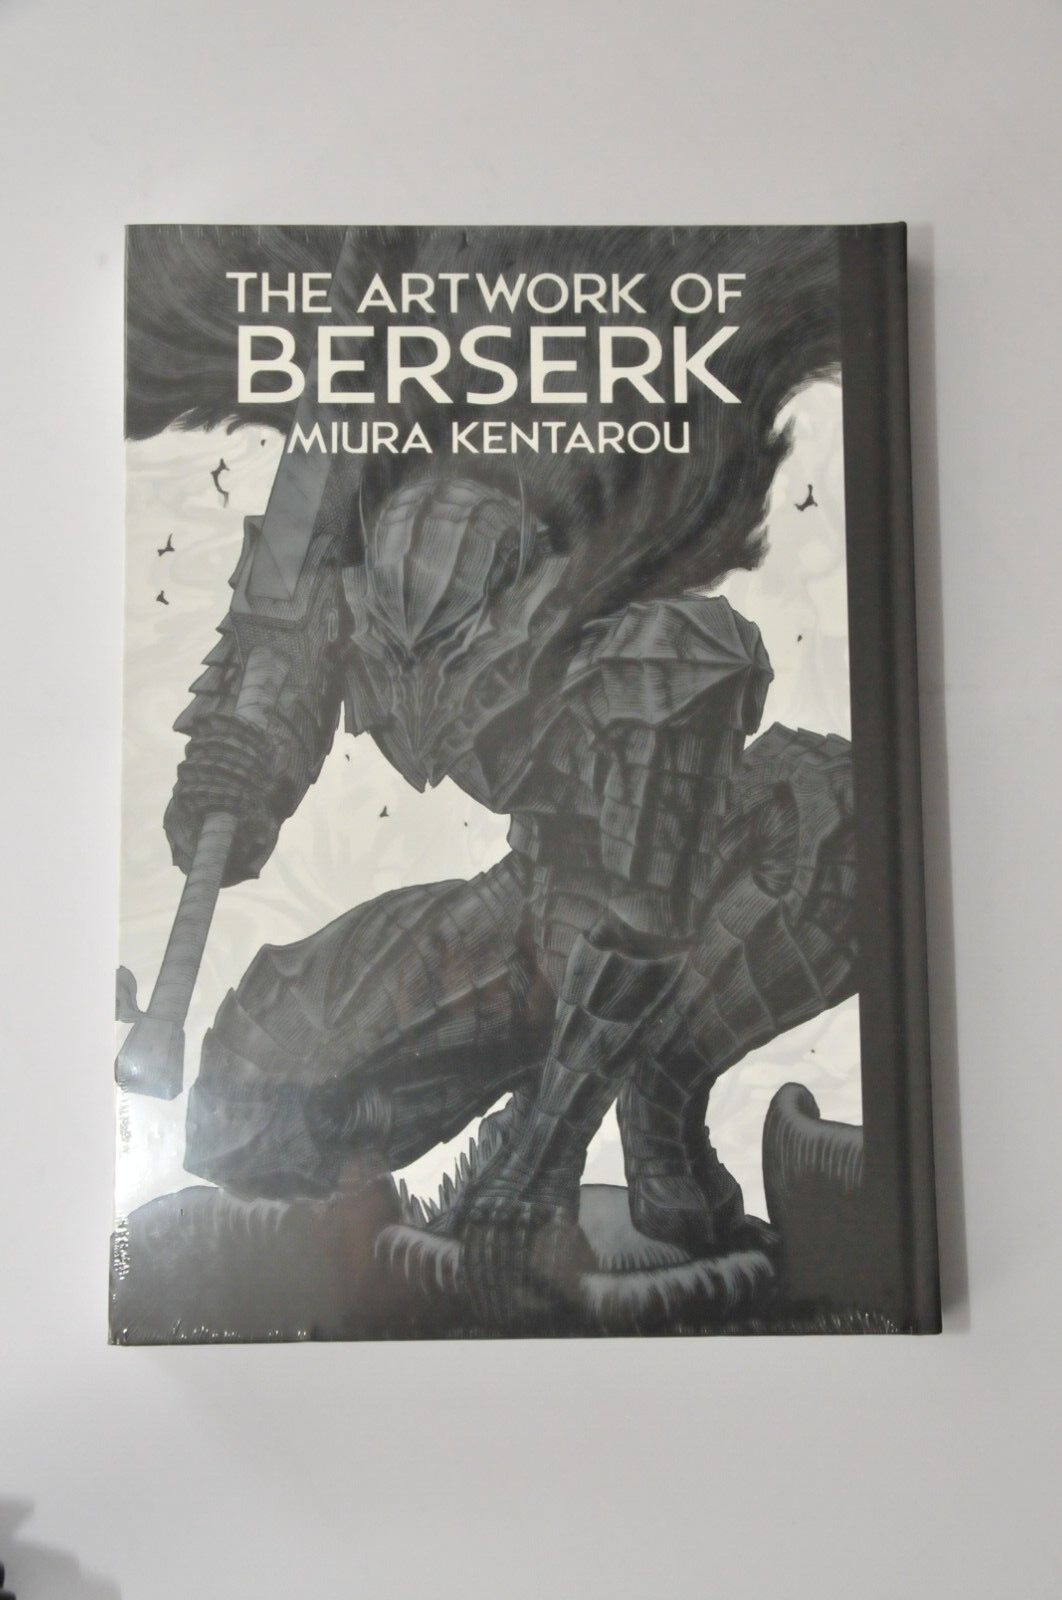 THE ARTWORK OF BERSERK BY MIURA KENTAROU OFFICIAL LIMITED ARTBOOK unsealed